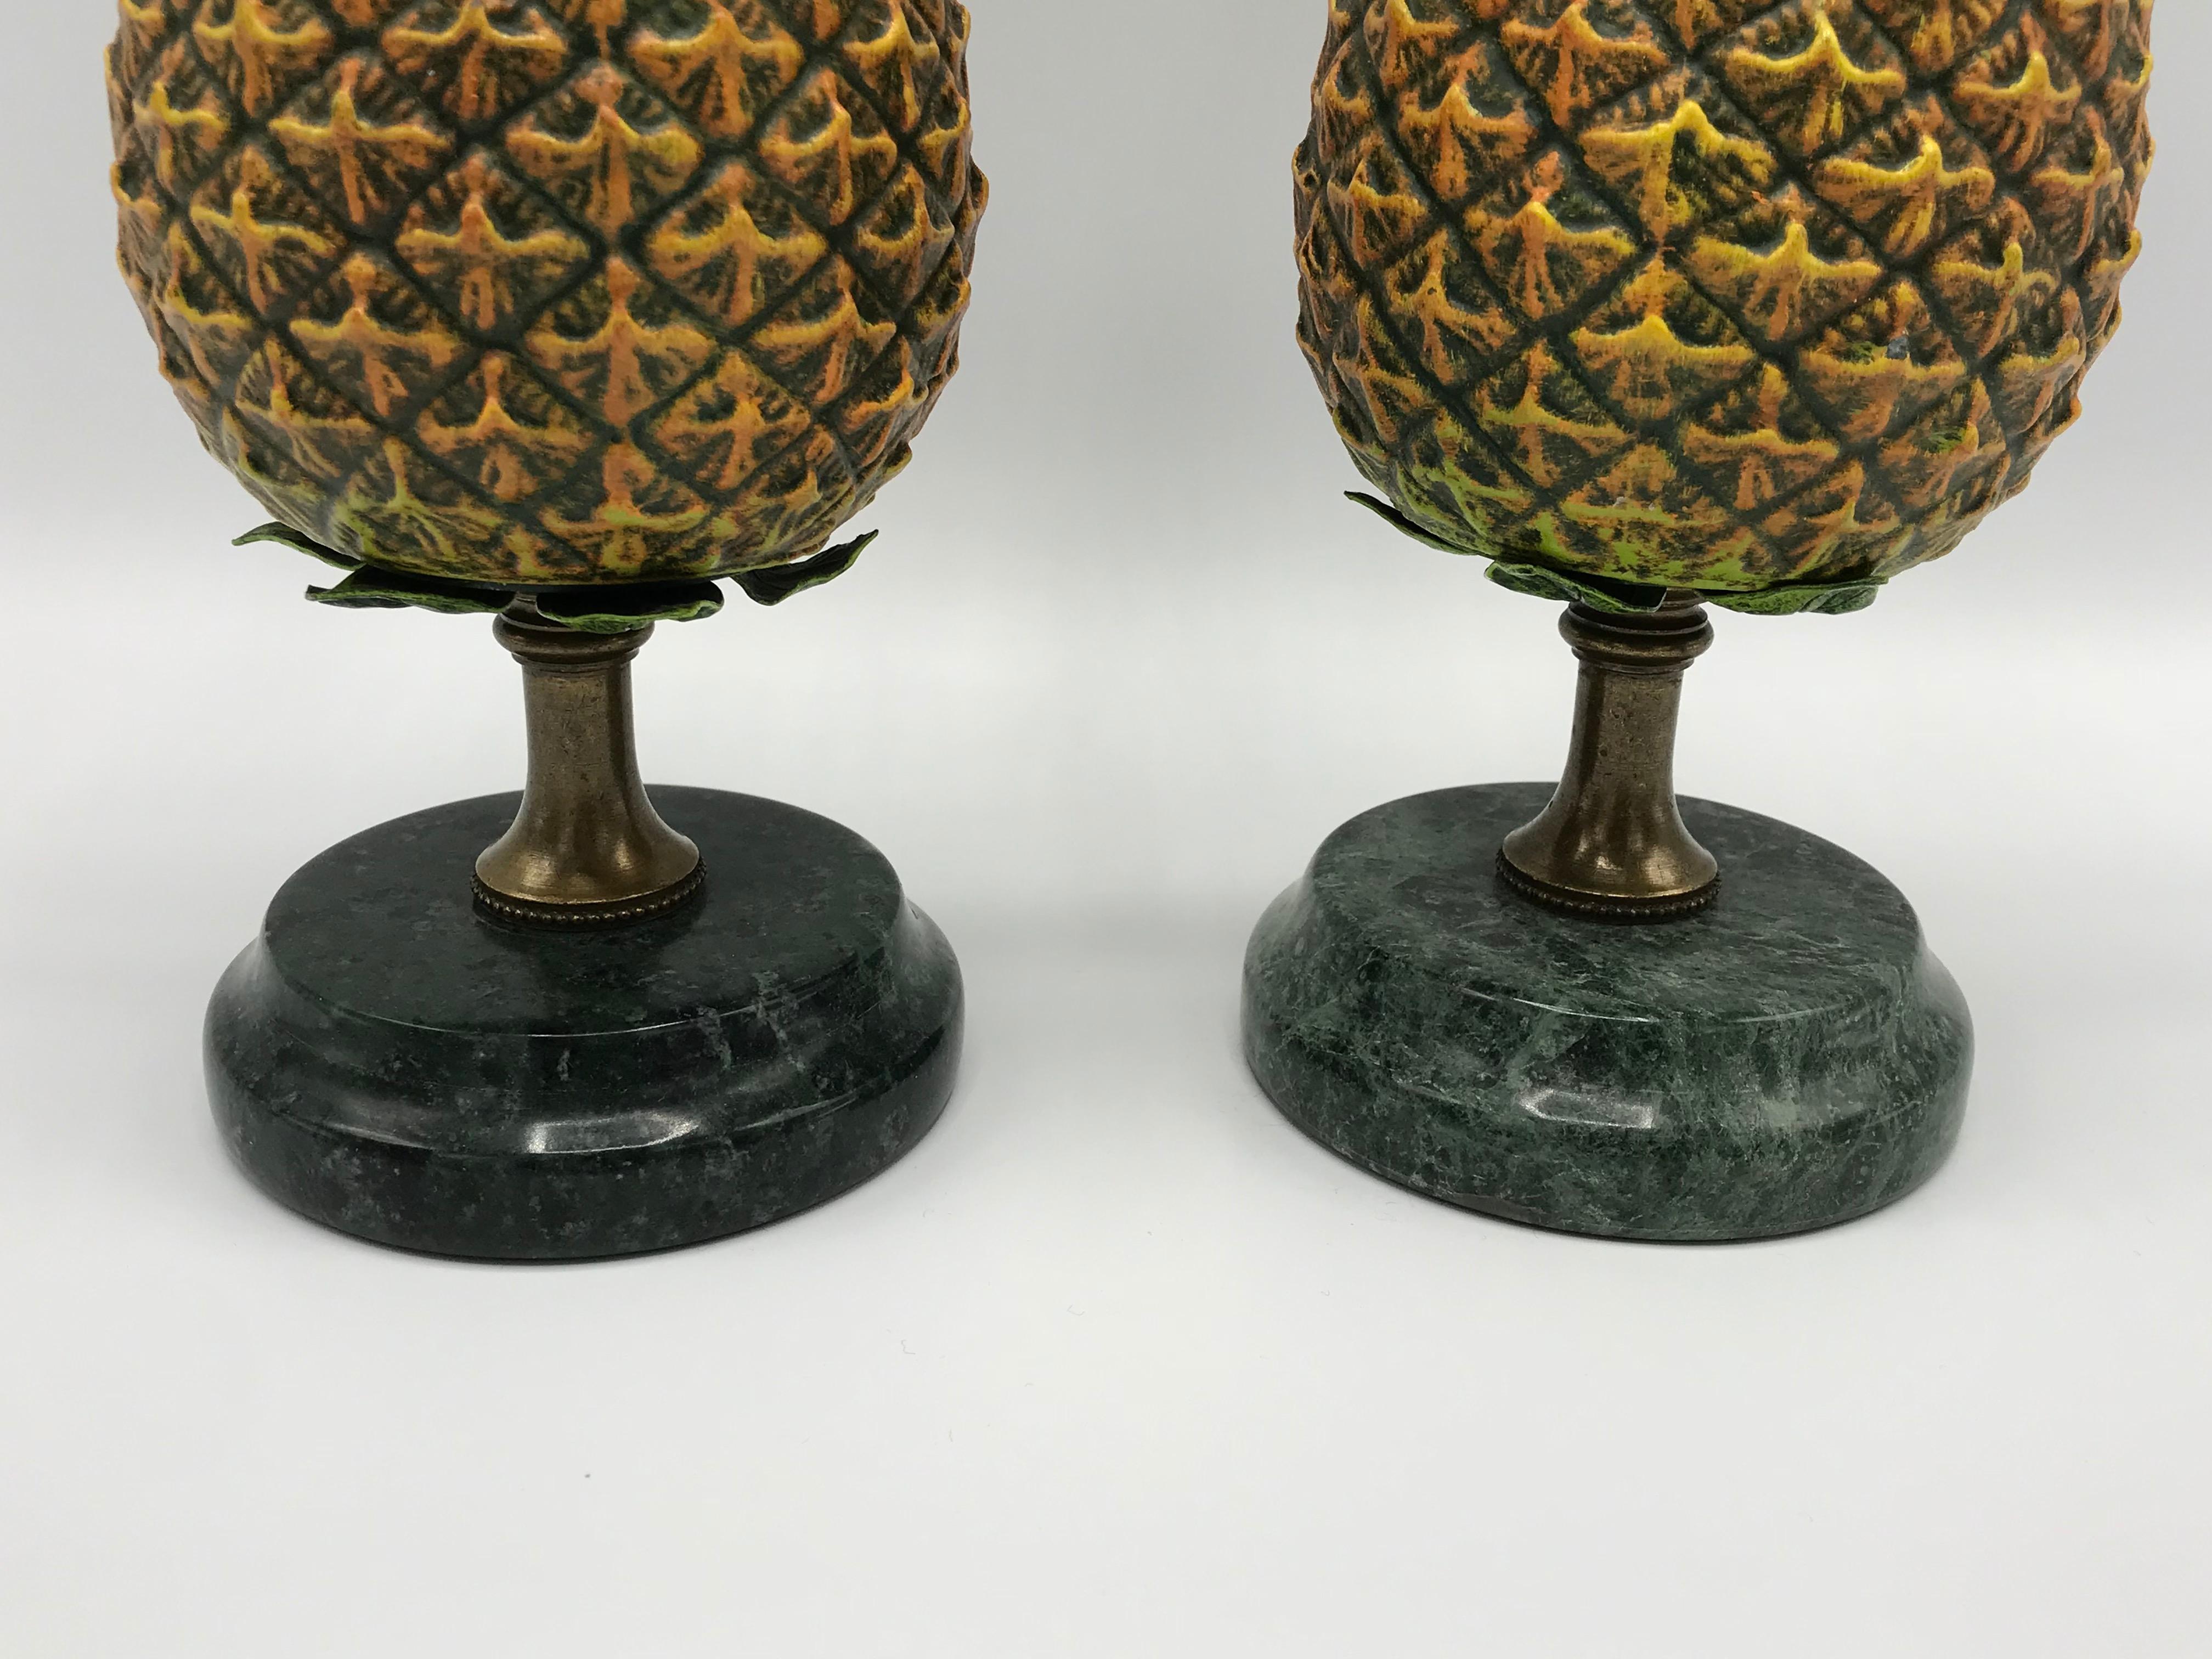 1980s Italian Tole Pineapple Sculpture Candlesticks, Pair 1